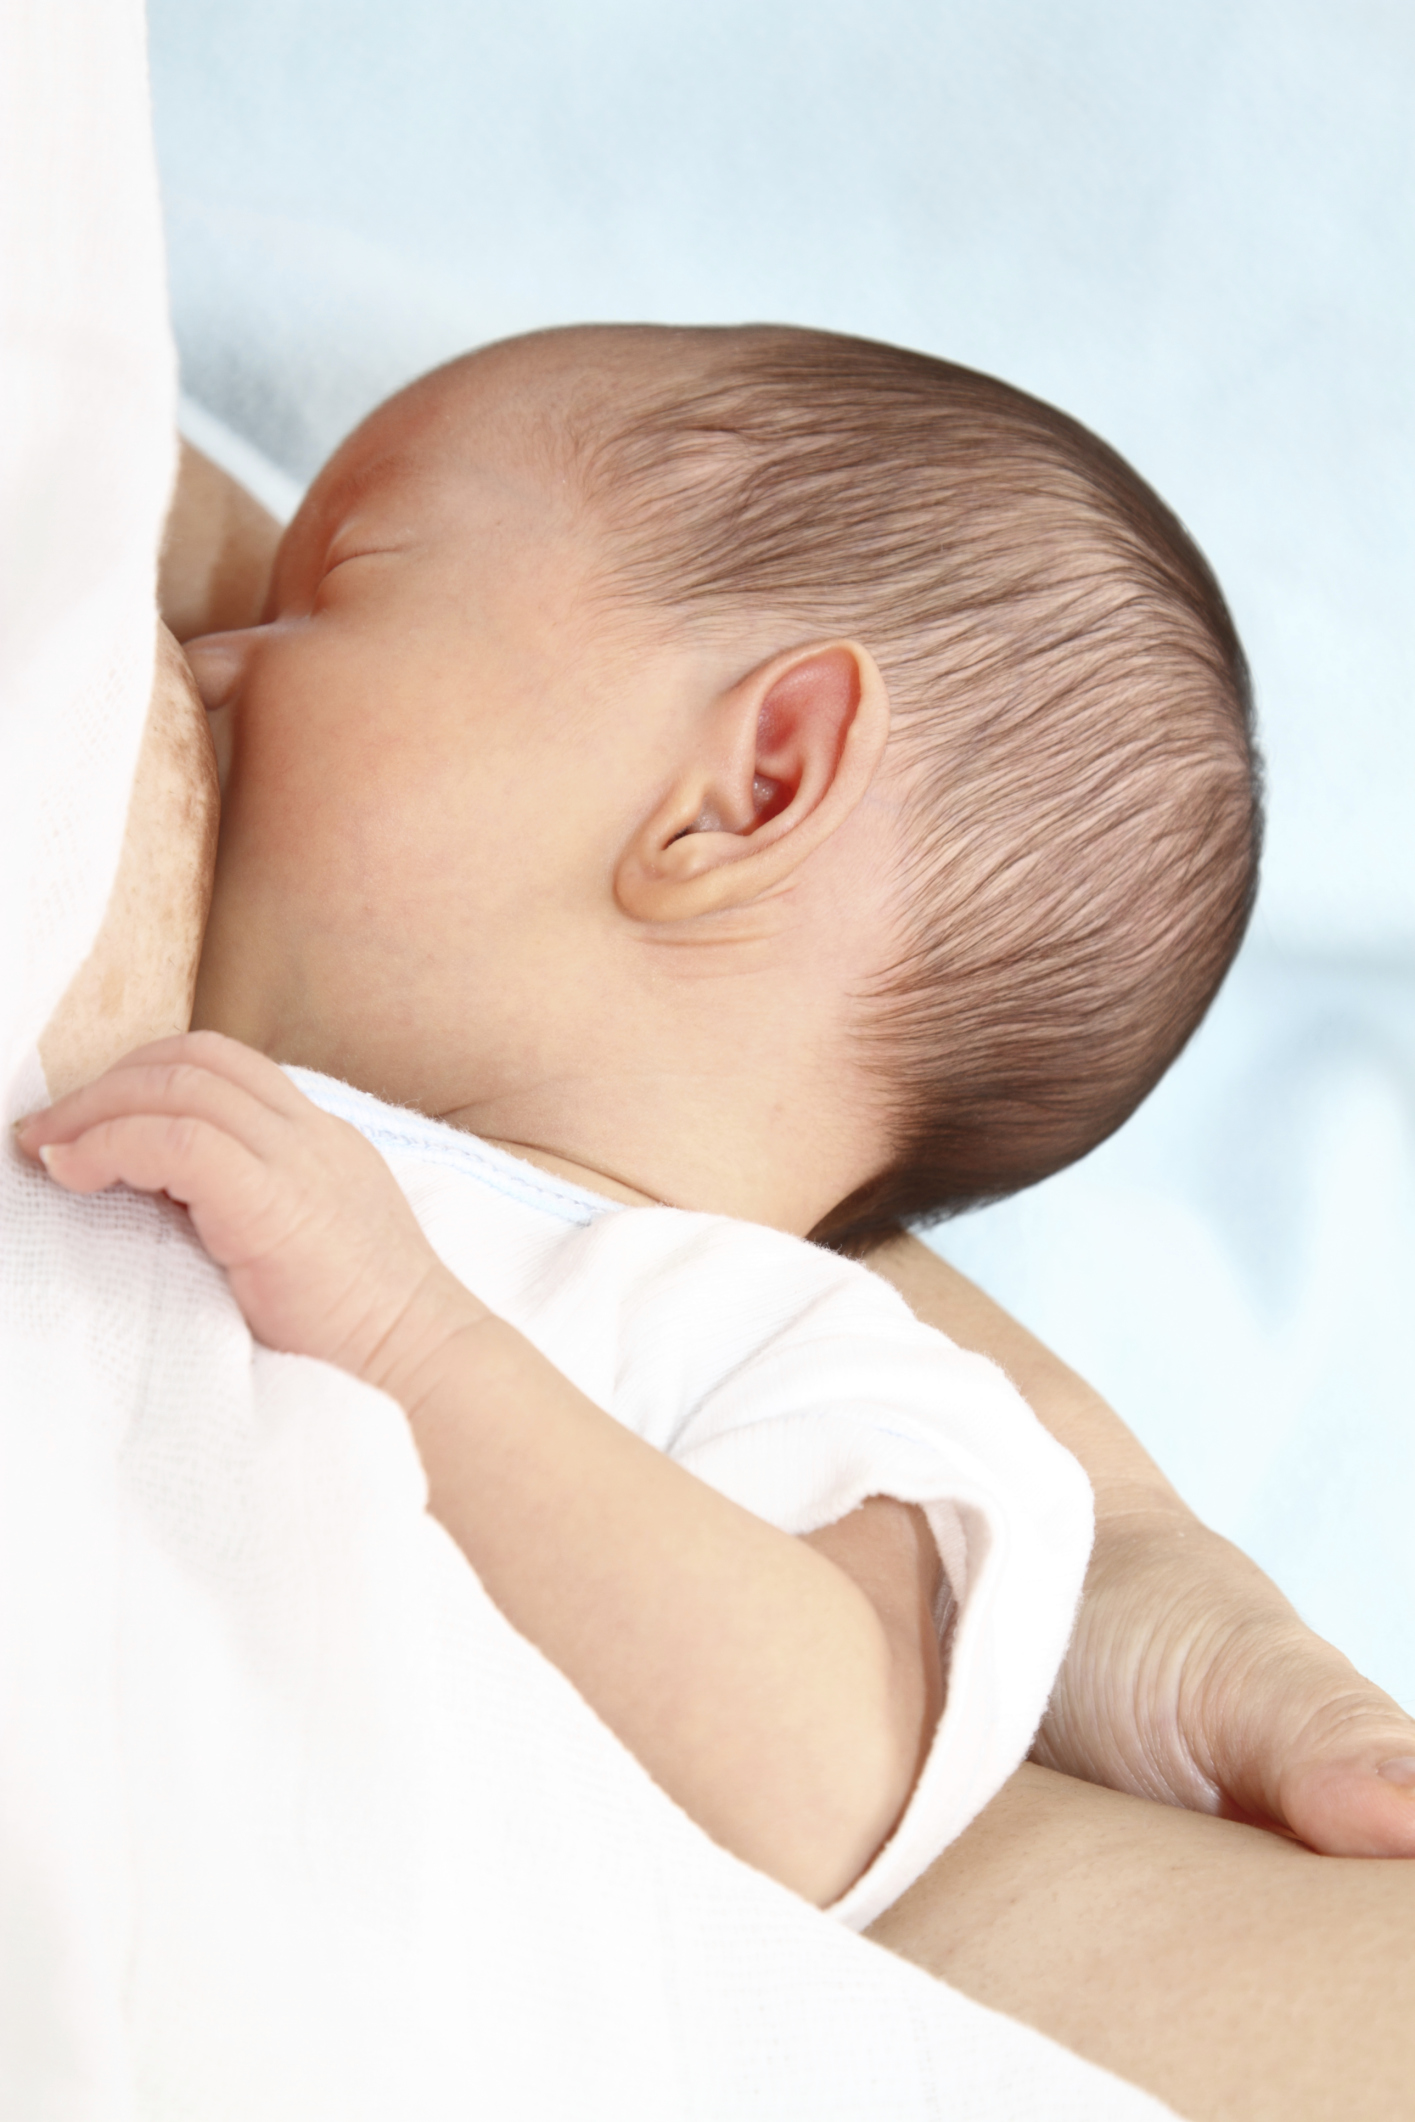 baby nursing nipple irritation